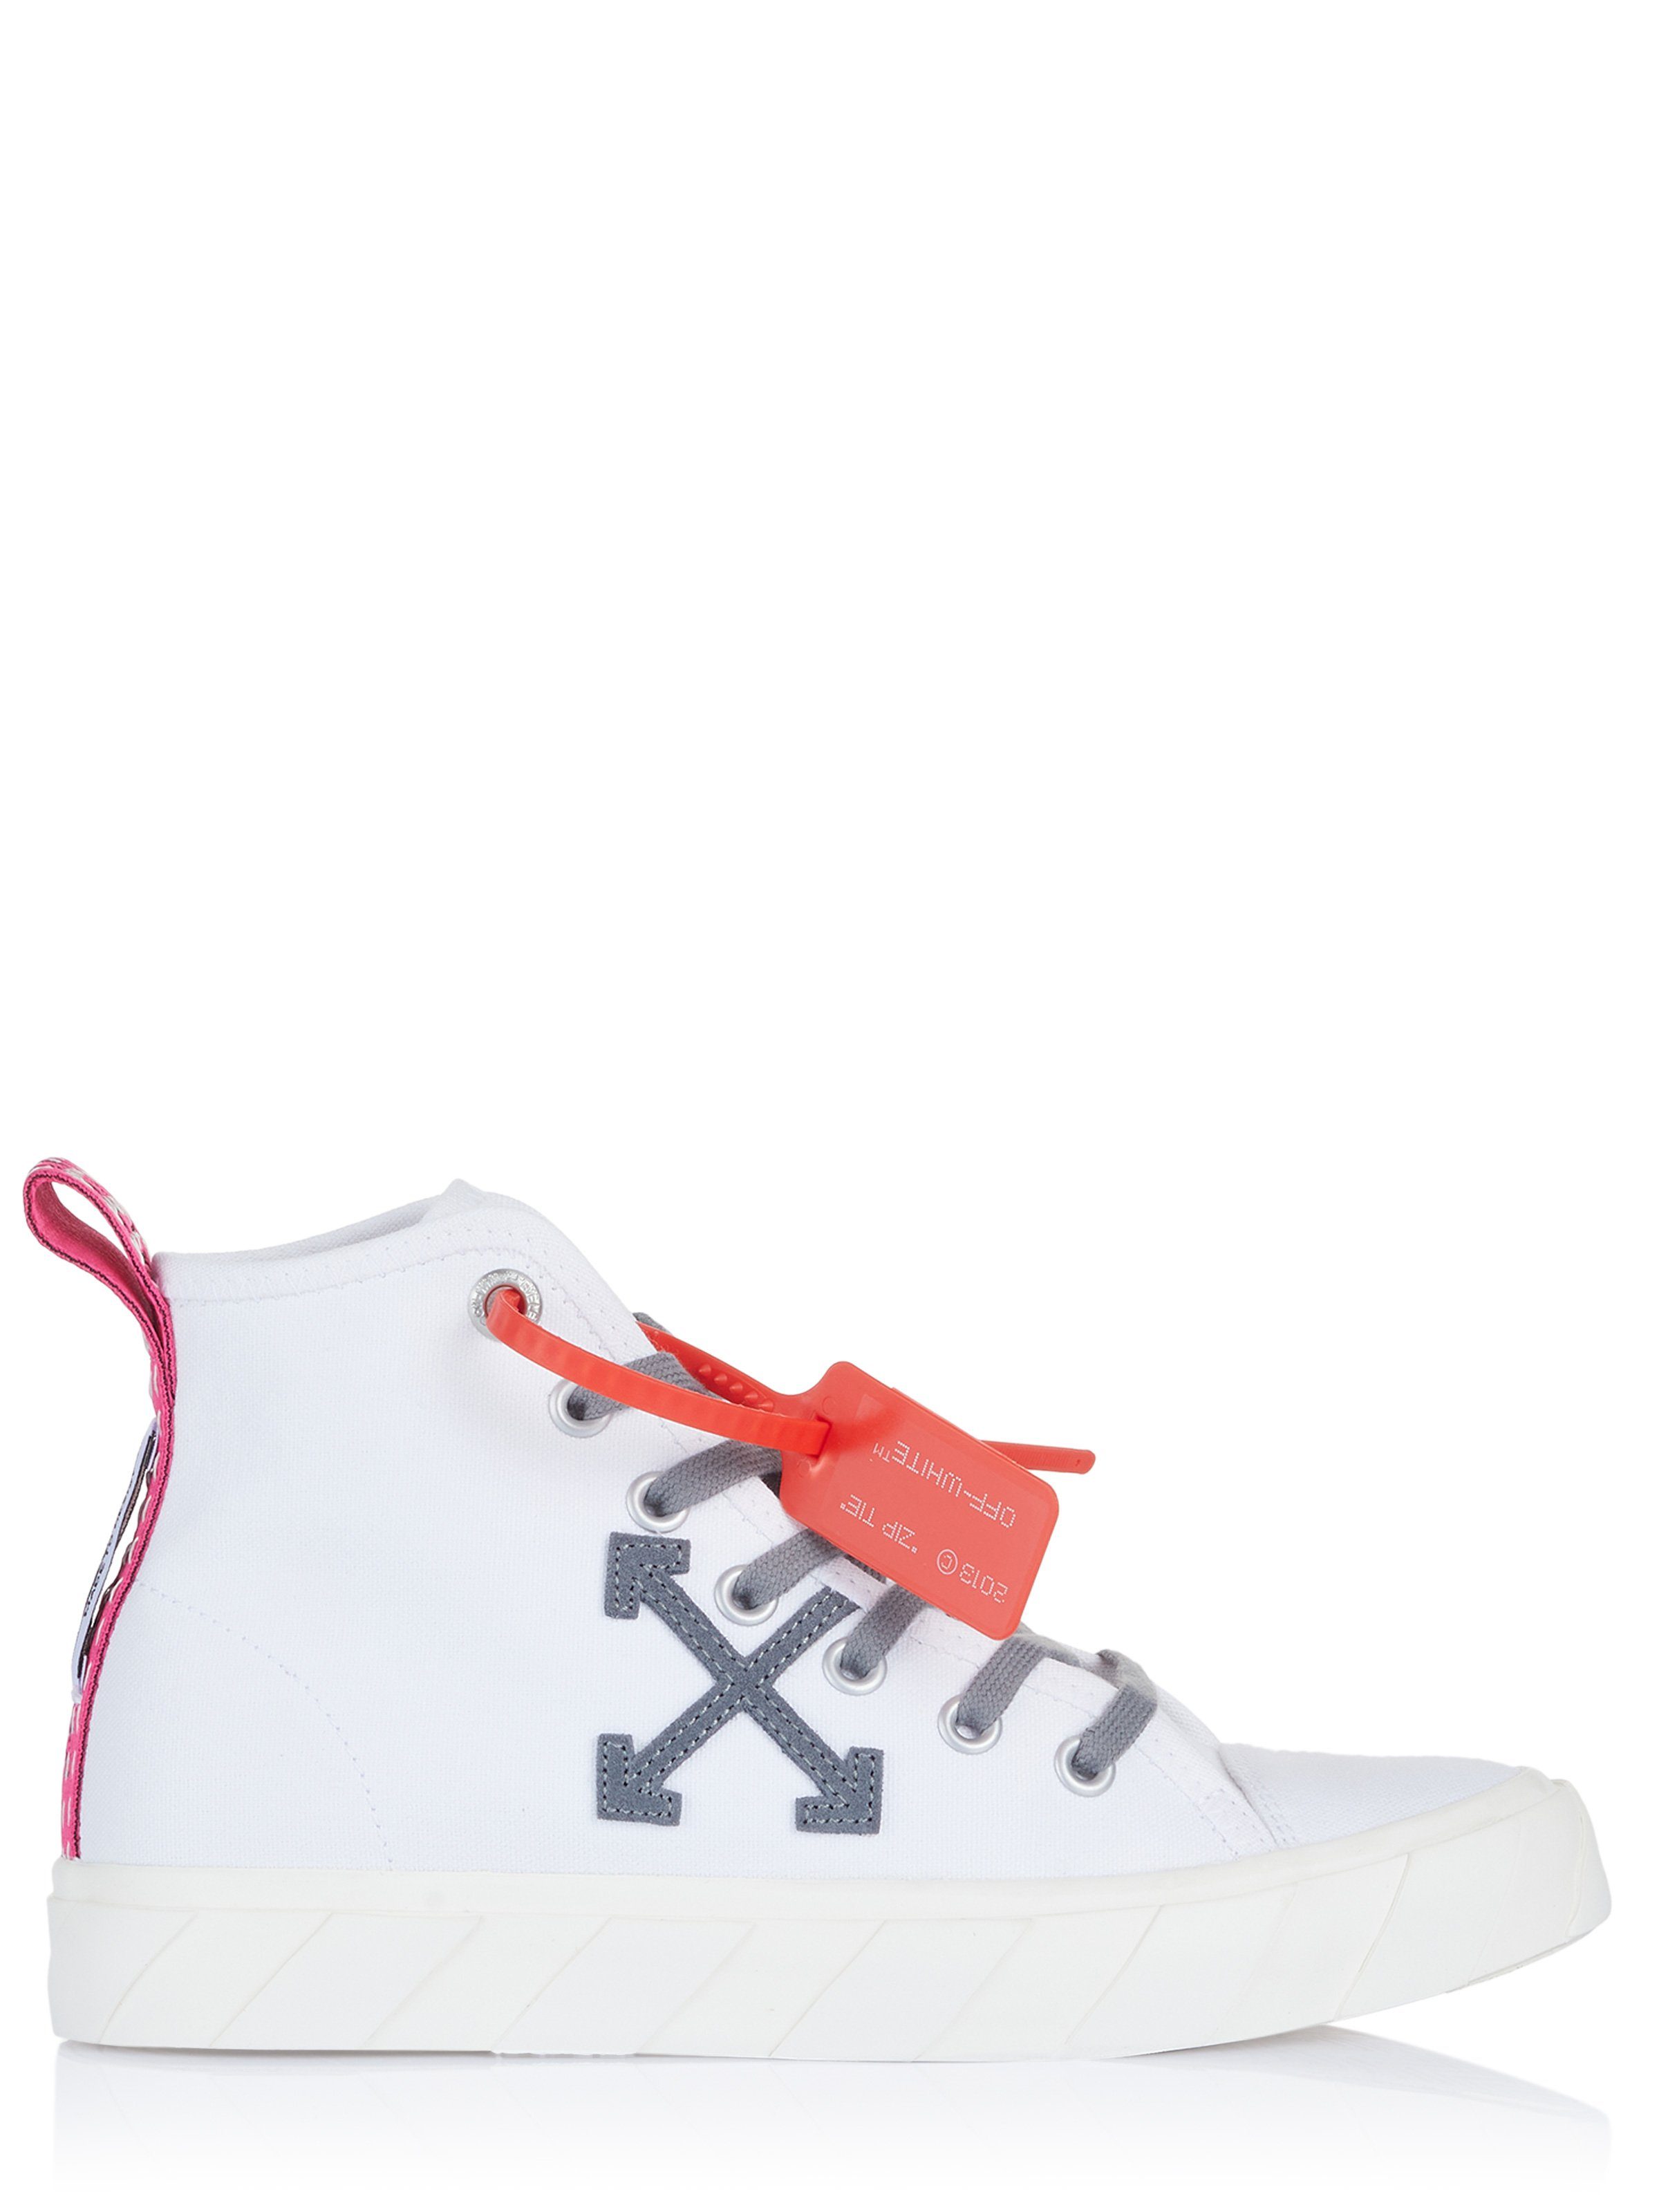 OFF-WHITE Off-White Schuhe Sneaker